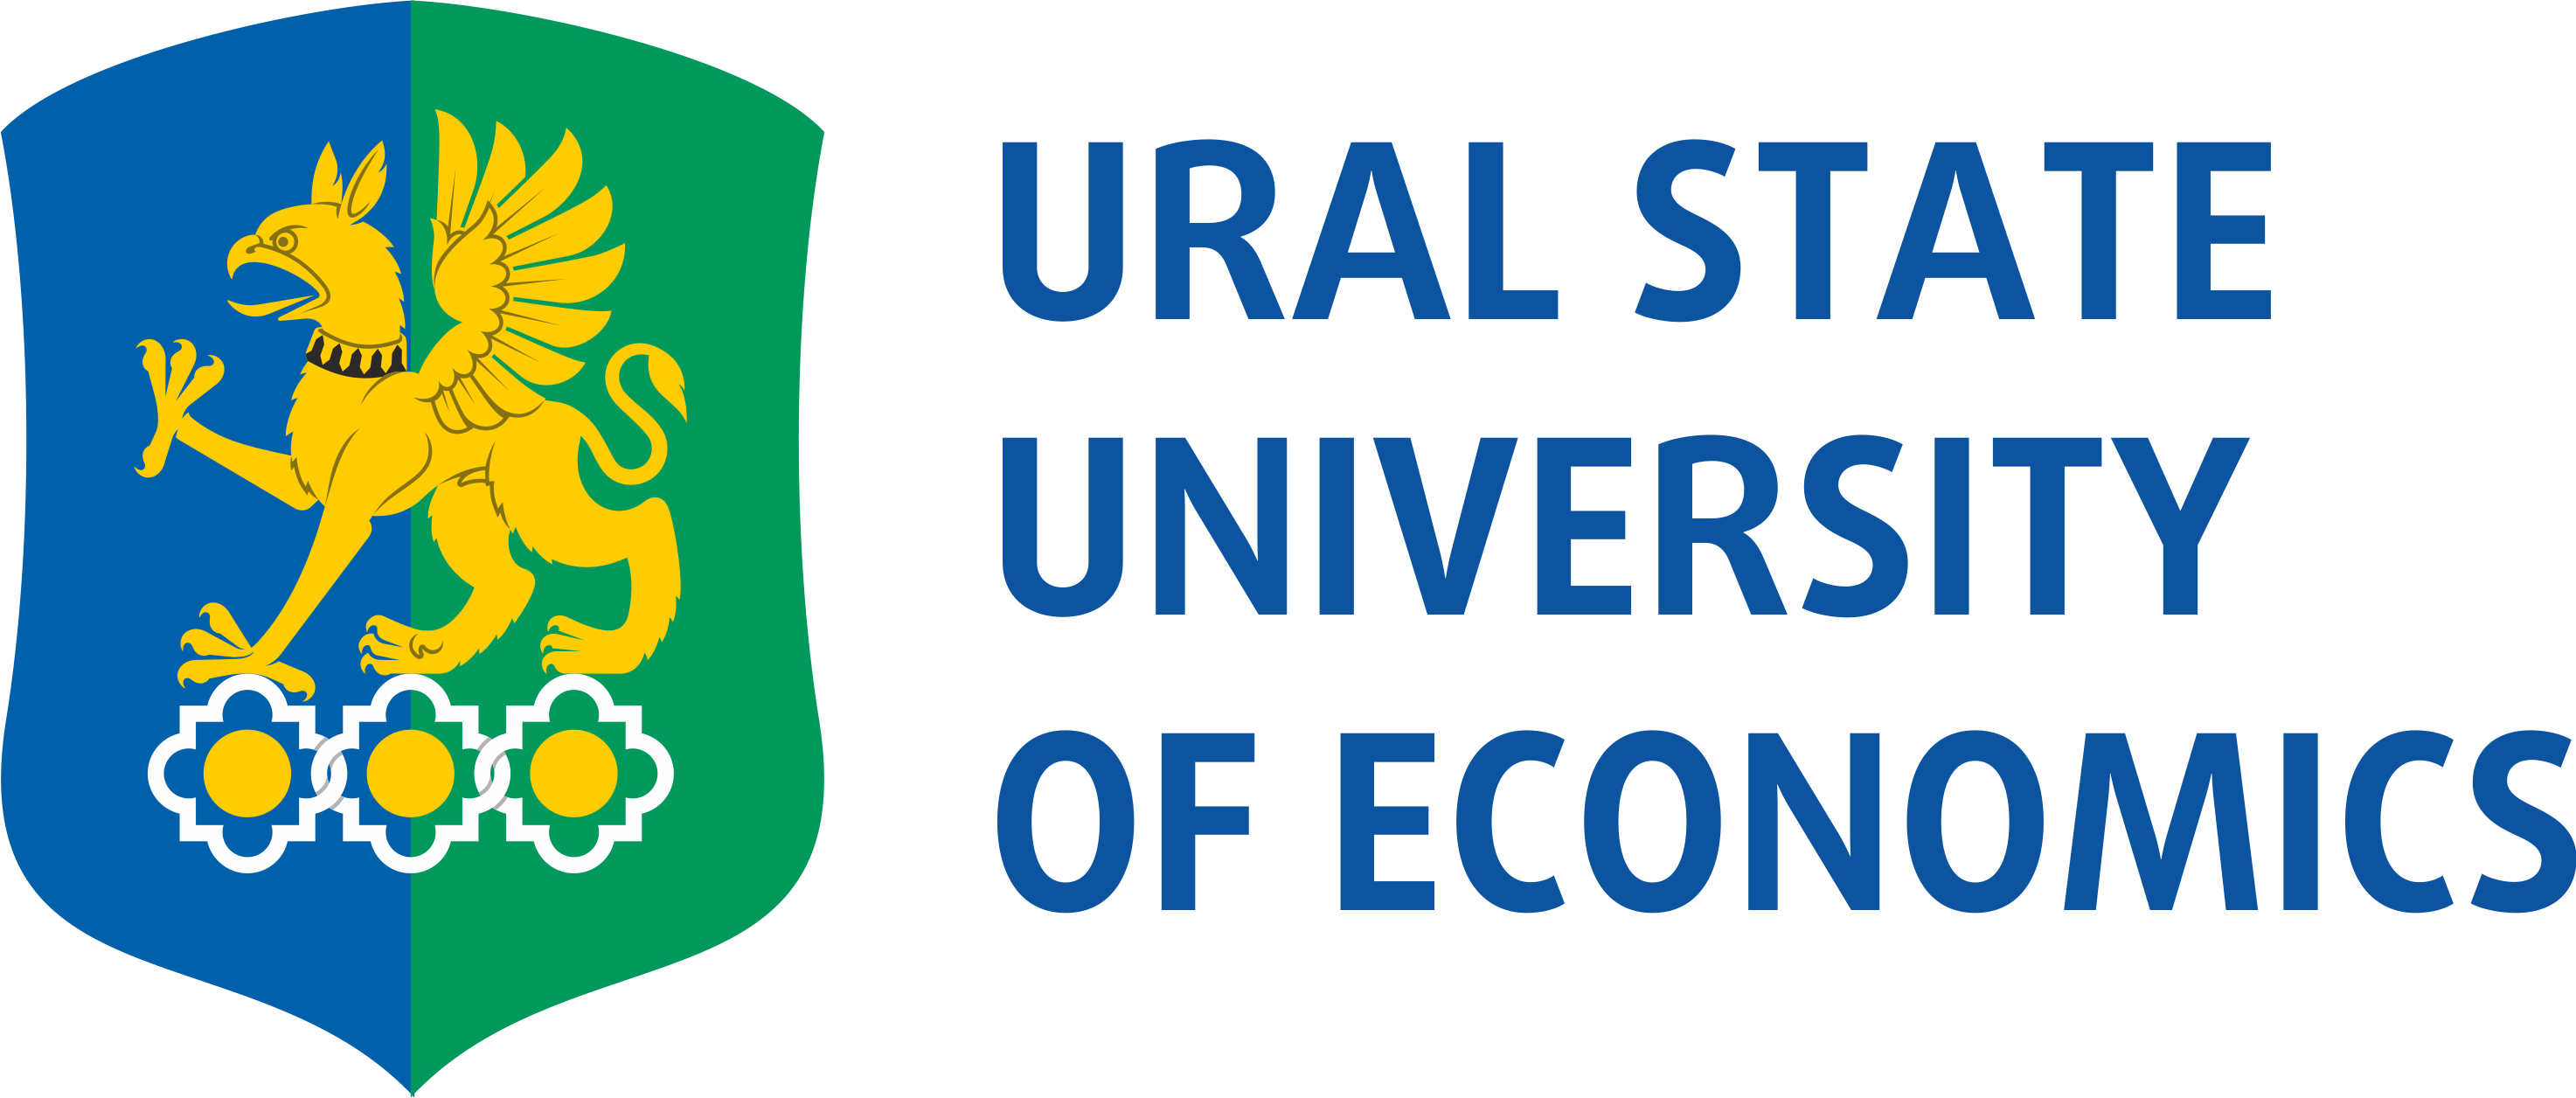 Ural state university of economics